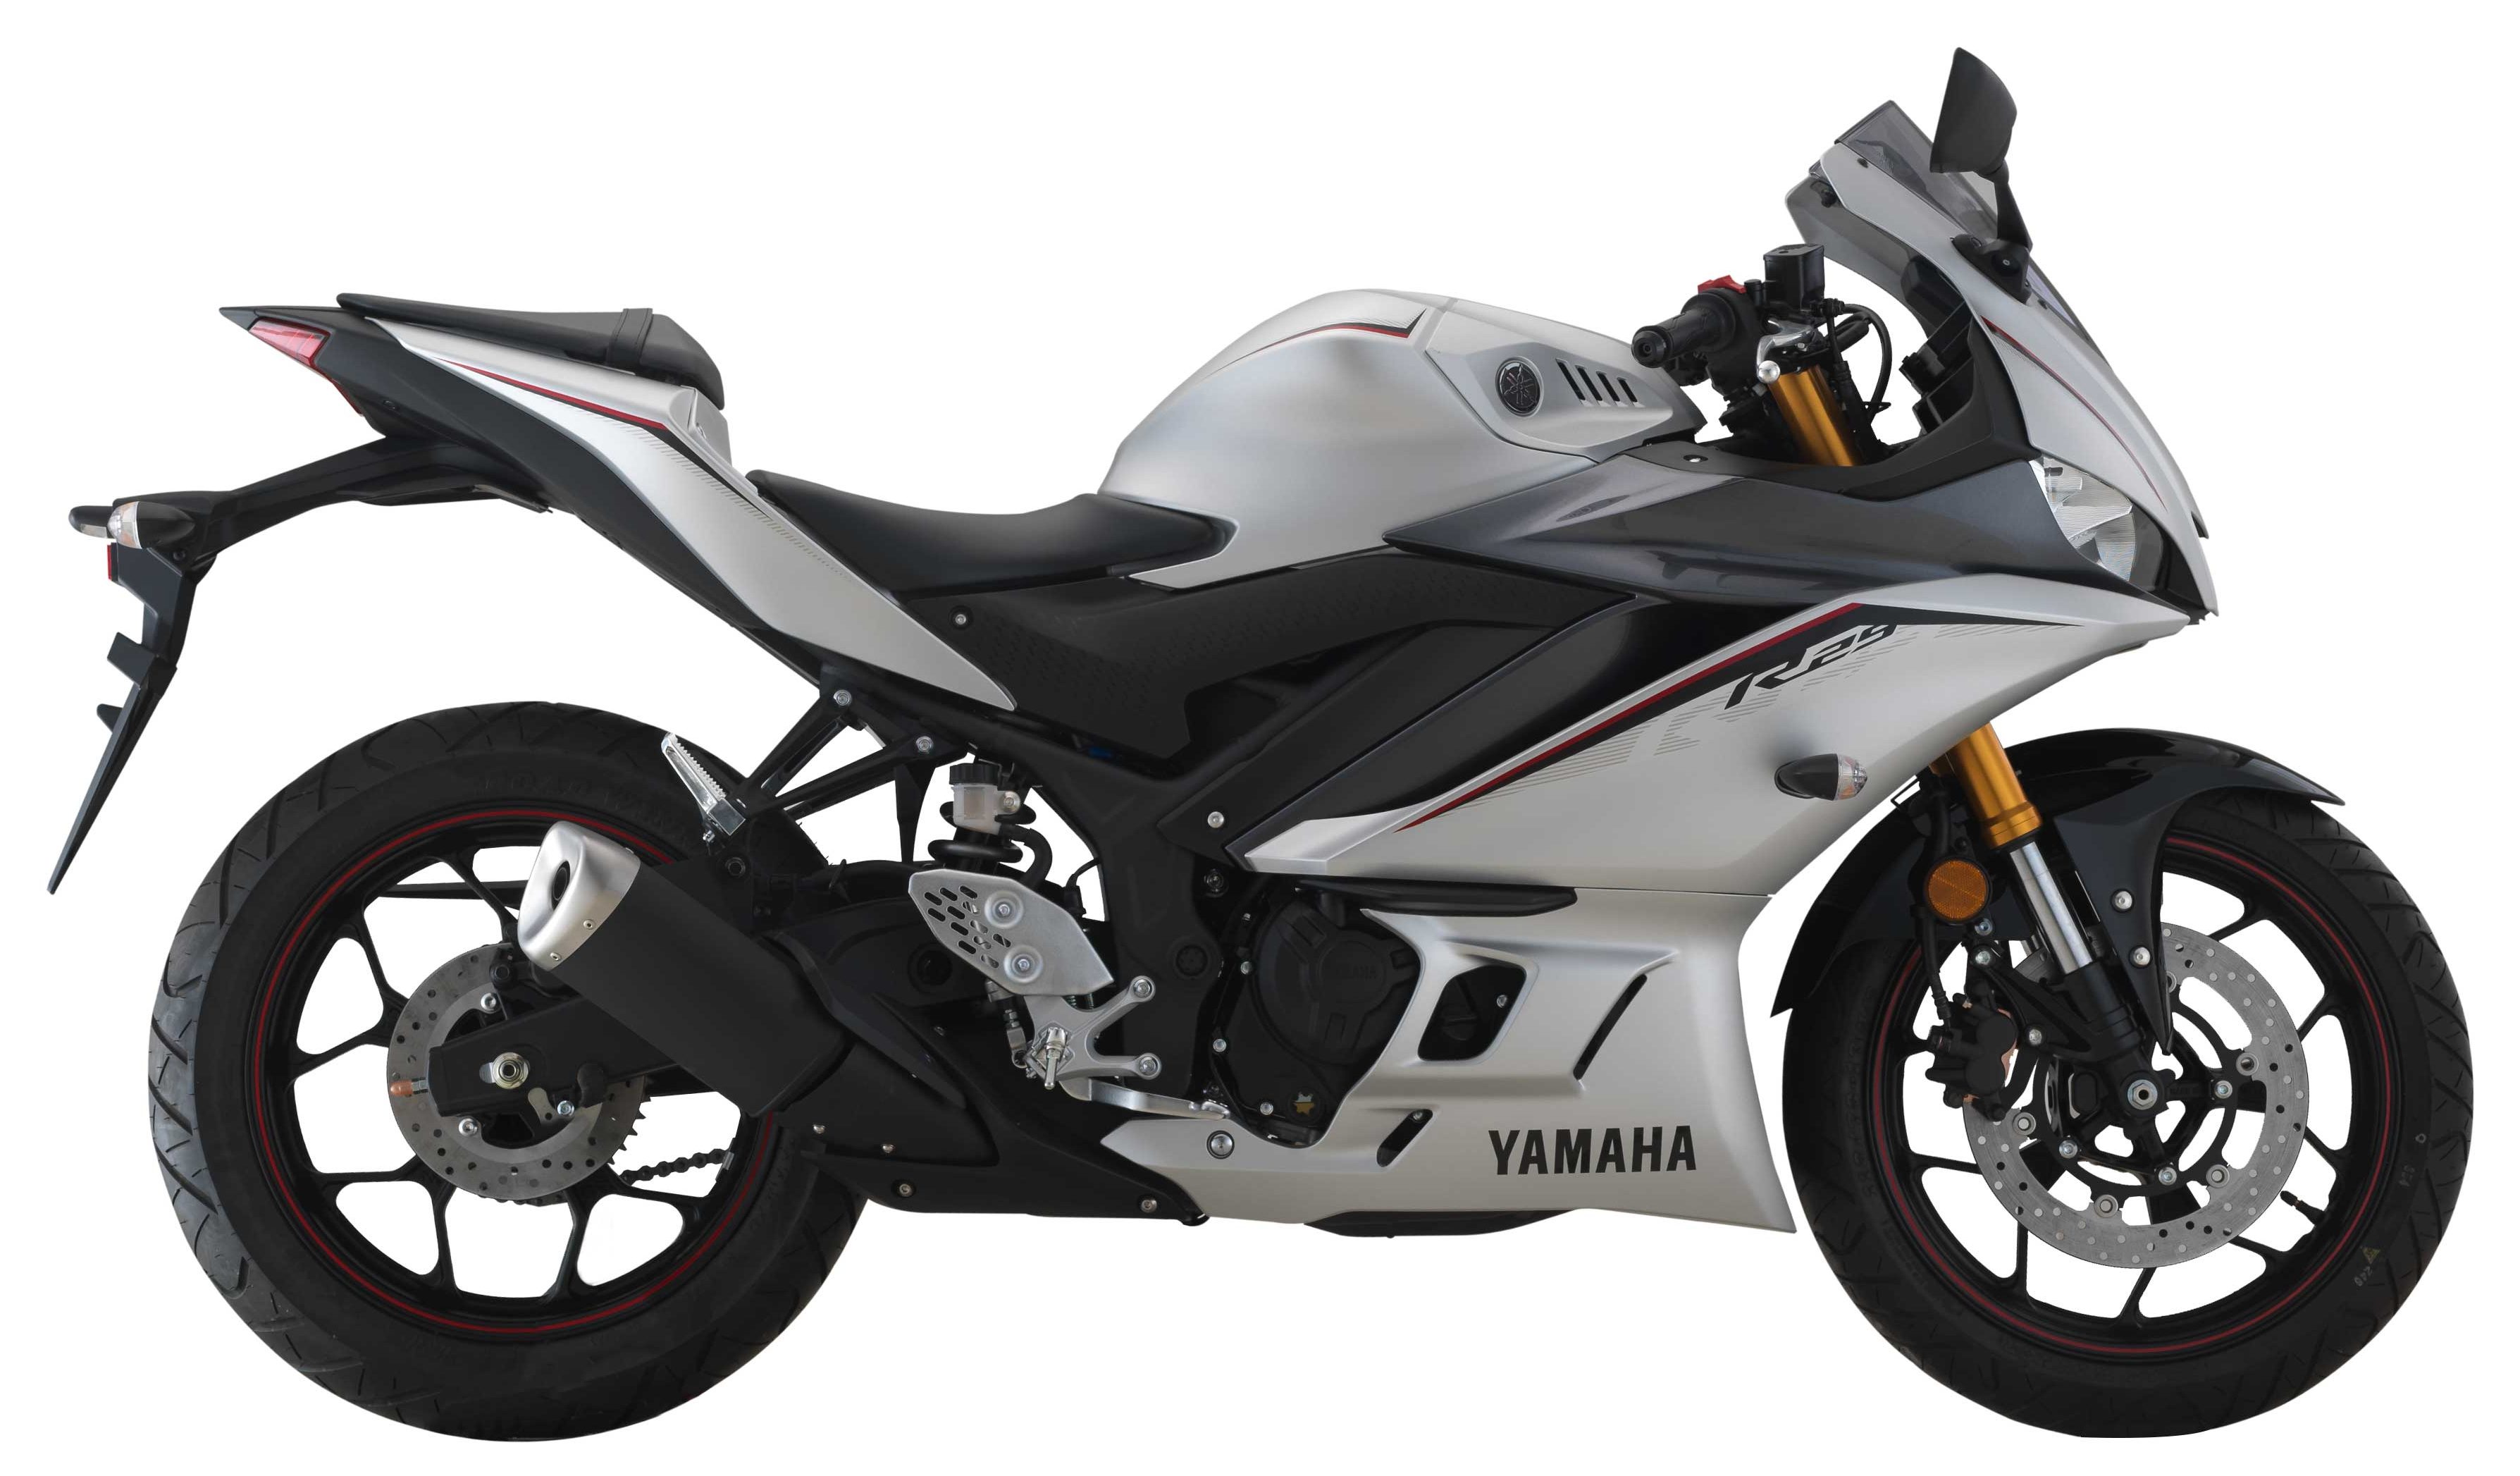 2020 Yamaha YZF-R25 Sports Bike Officially Revealed - landscape